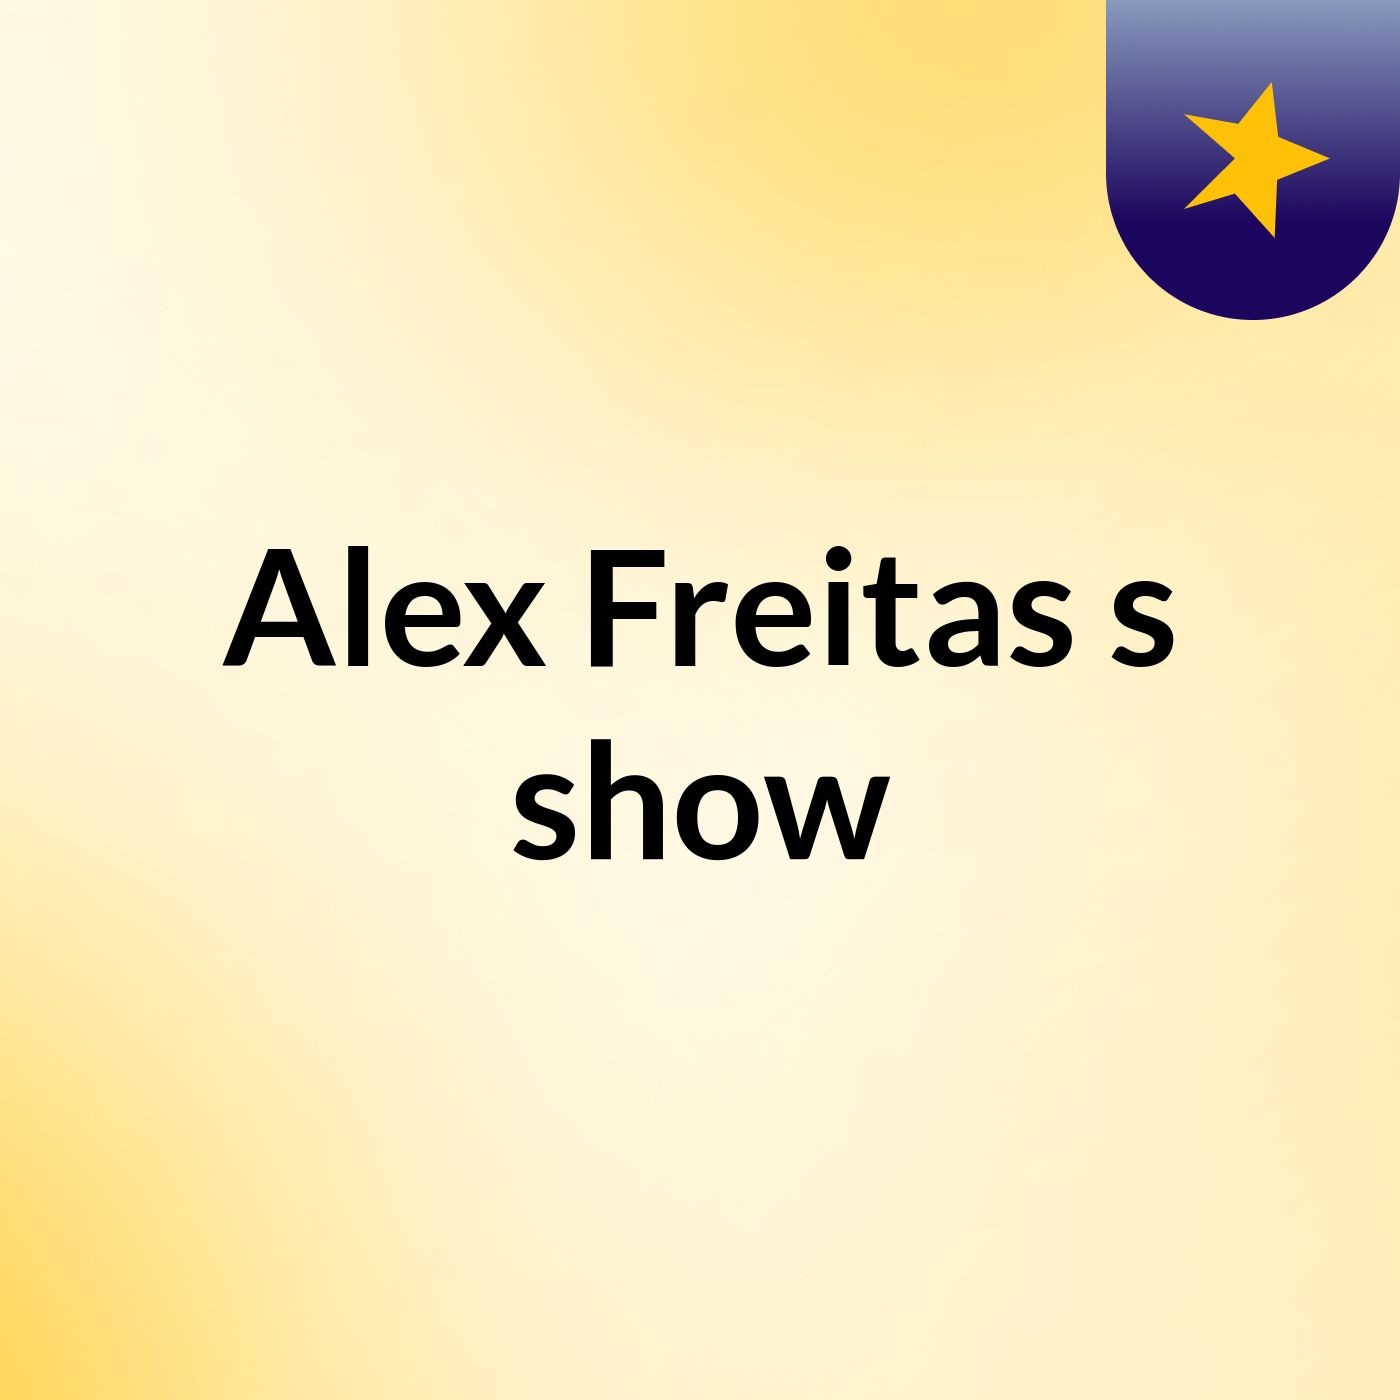 Alex Freitas's show